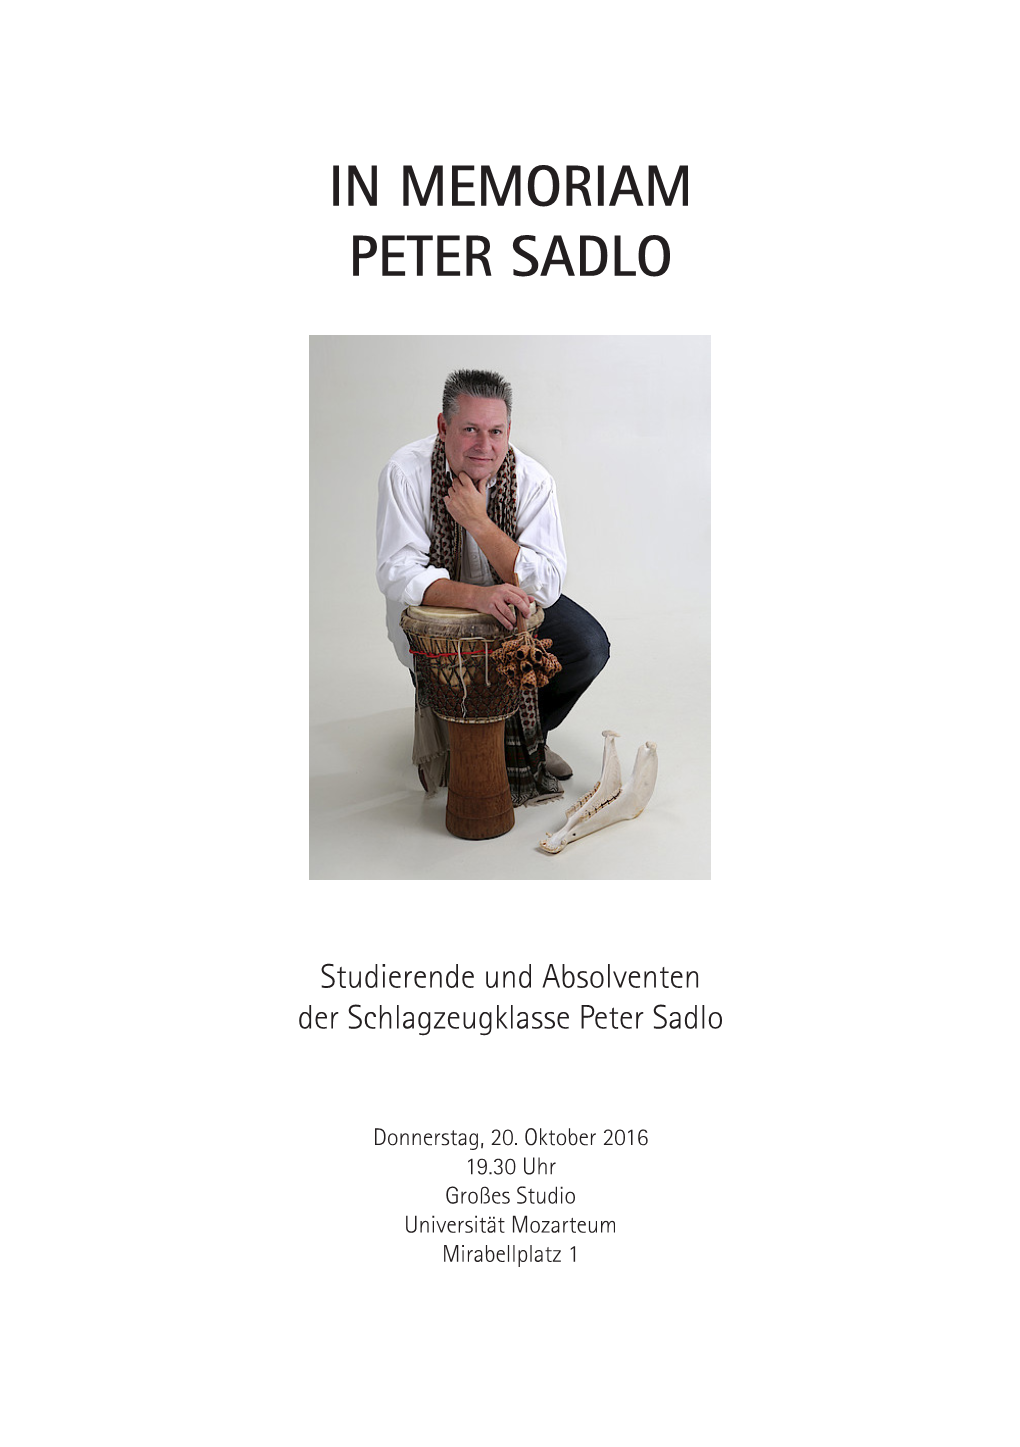 In Memoriam Peter Sadlo